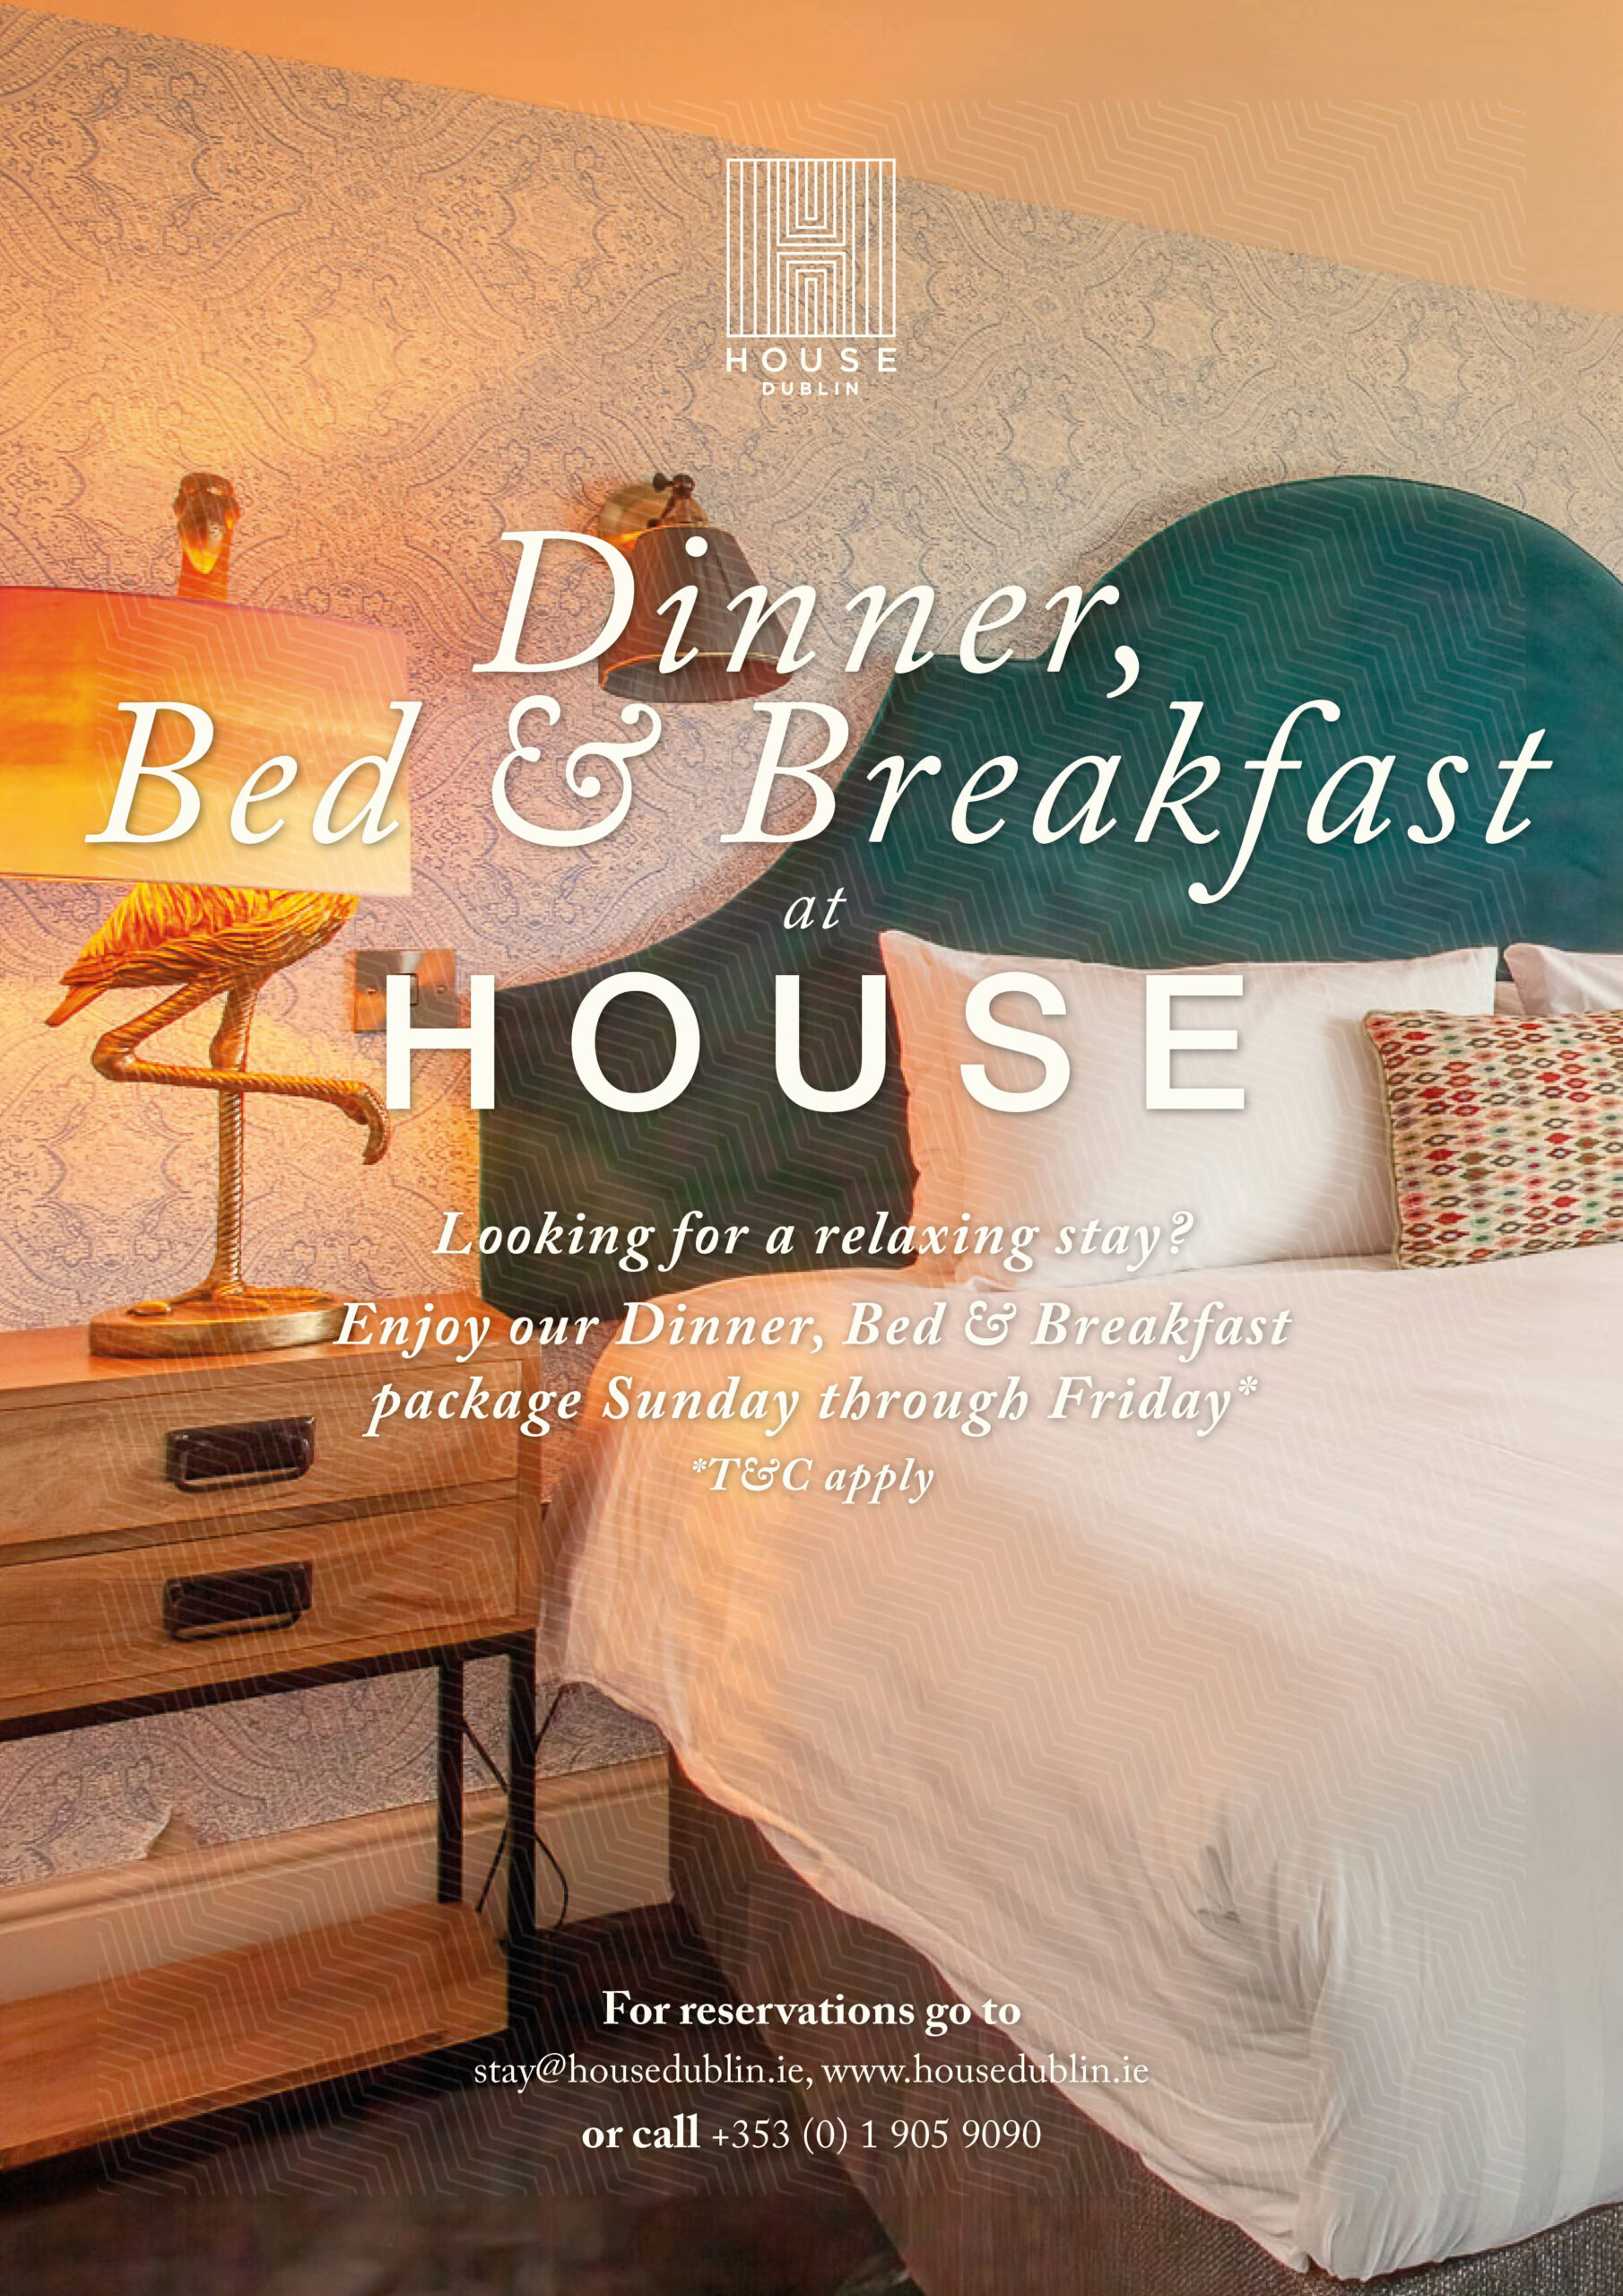 Dinner, Bed & Breakfast Offer at House